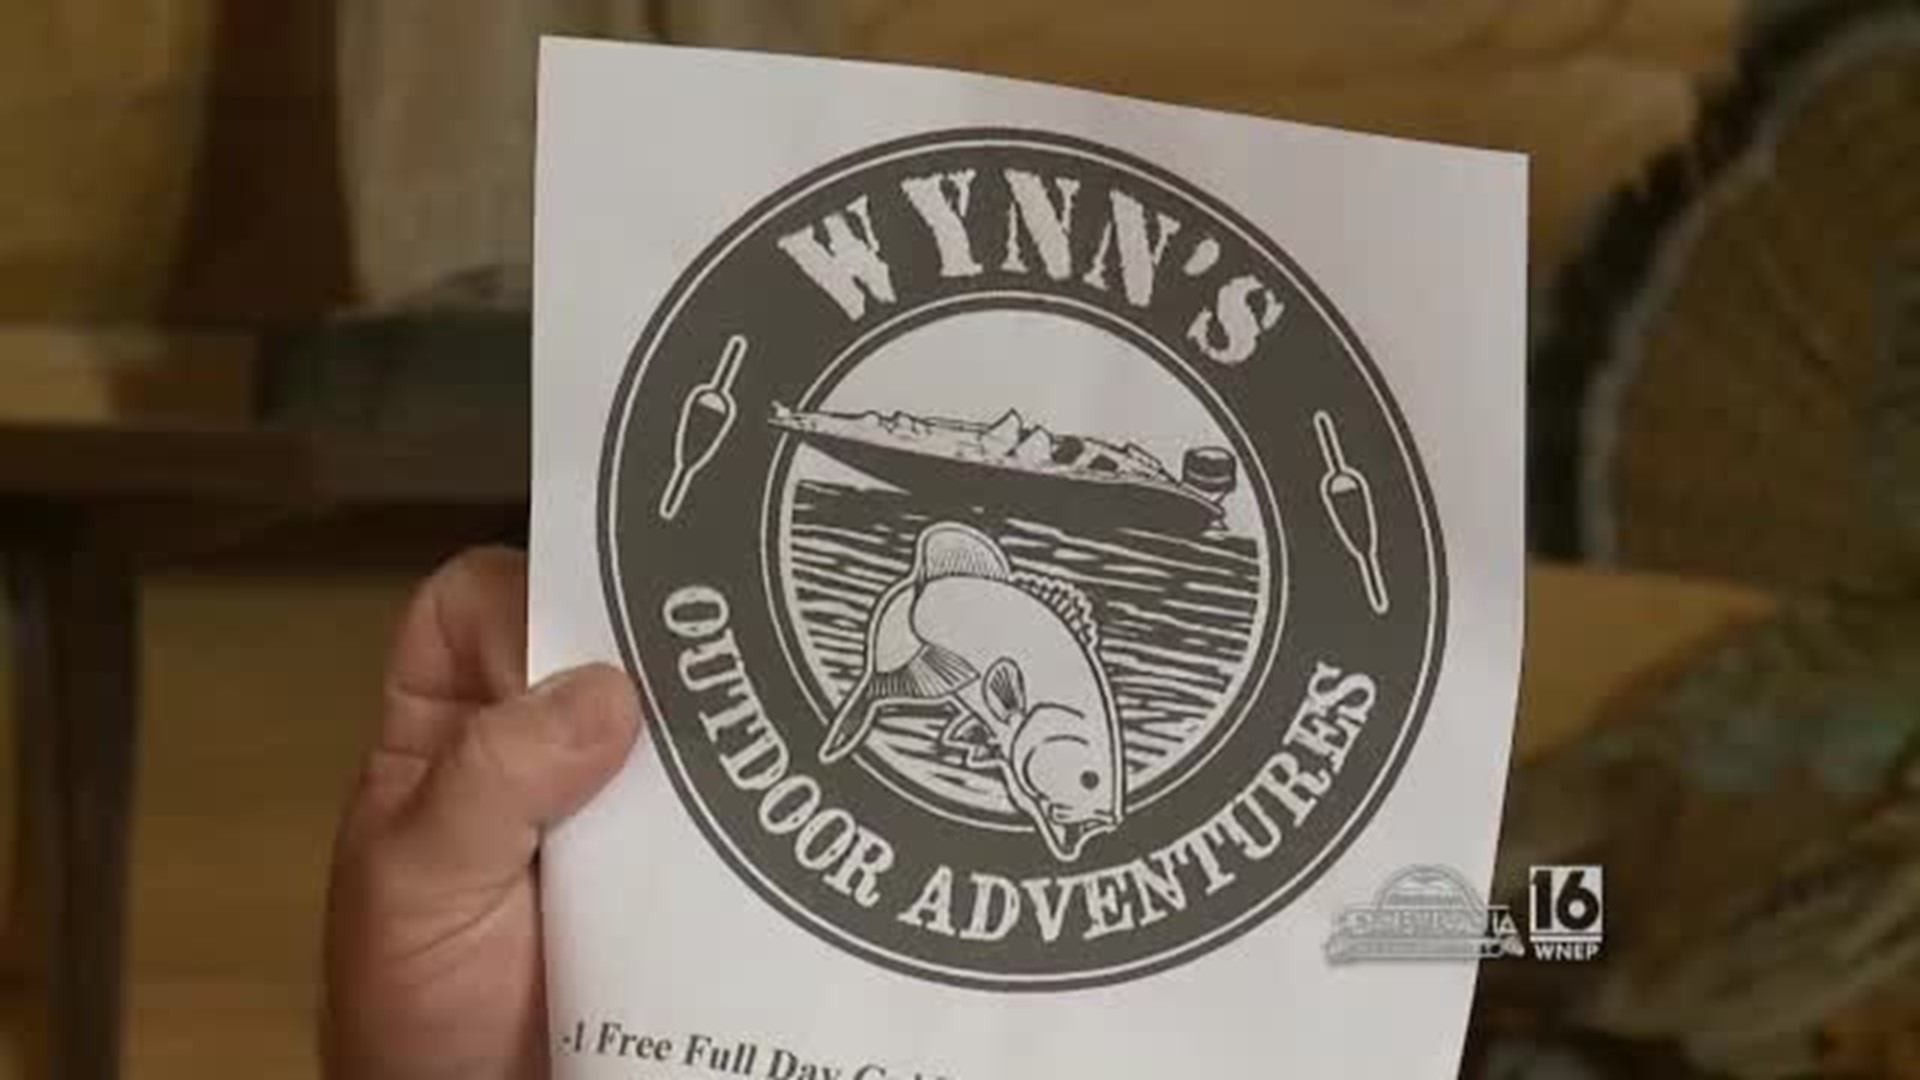 Wynn's Outdoor Adventures Fishing Trip Giveaway